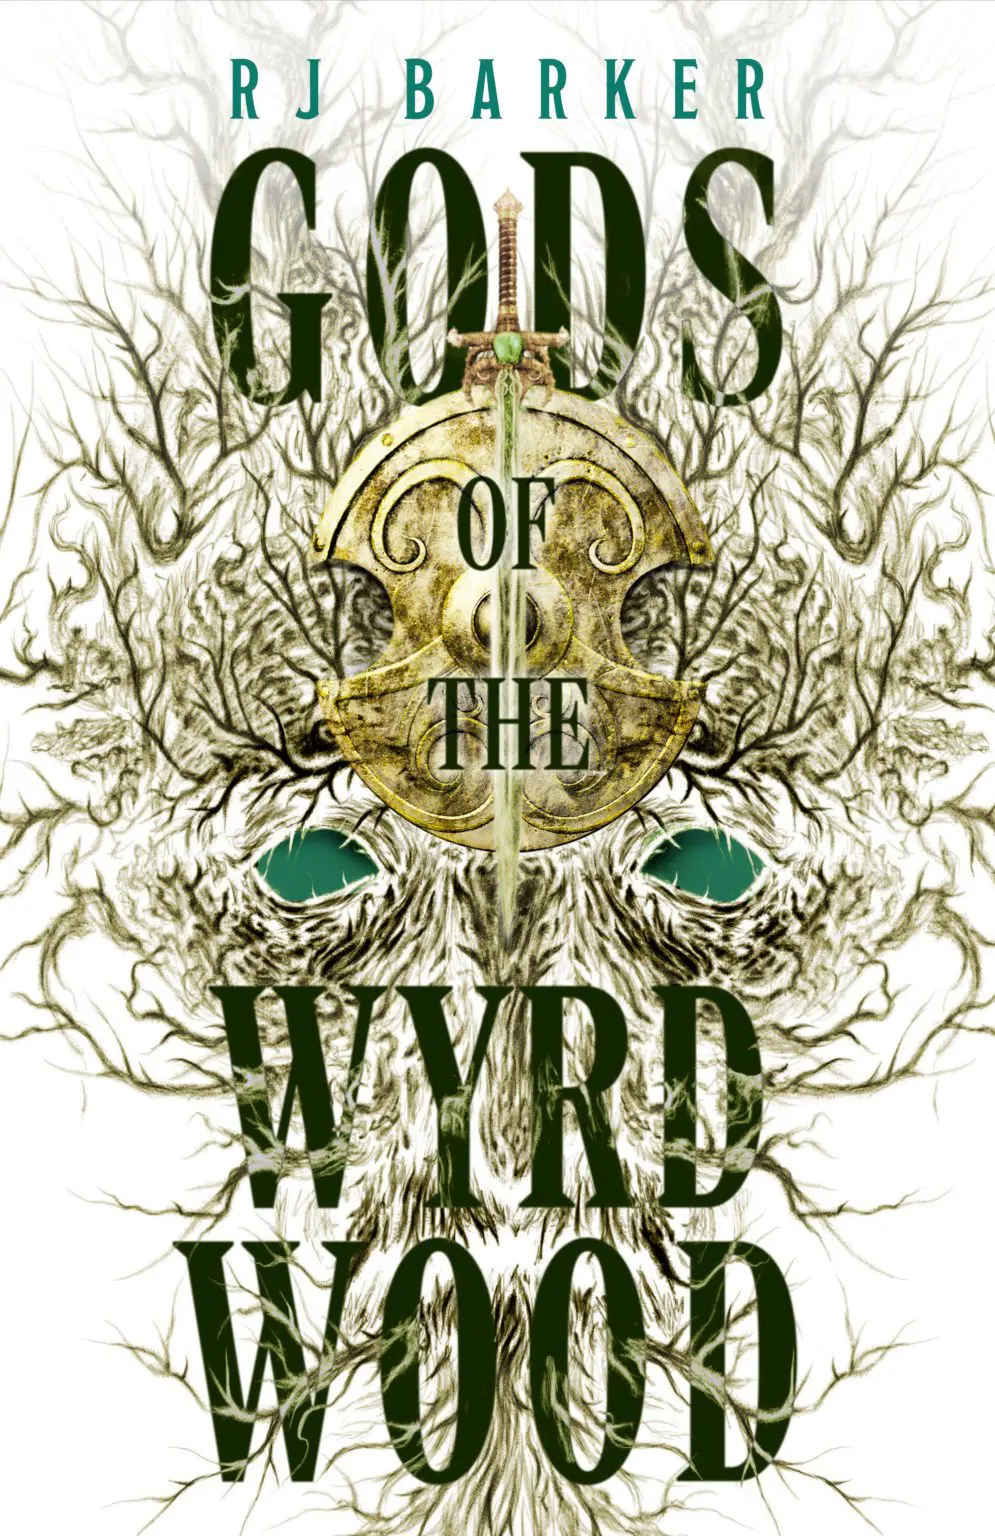 Gods of the Wyrdwood by RJ Barker